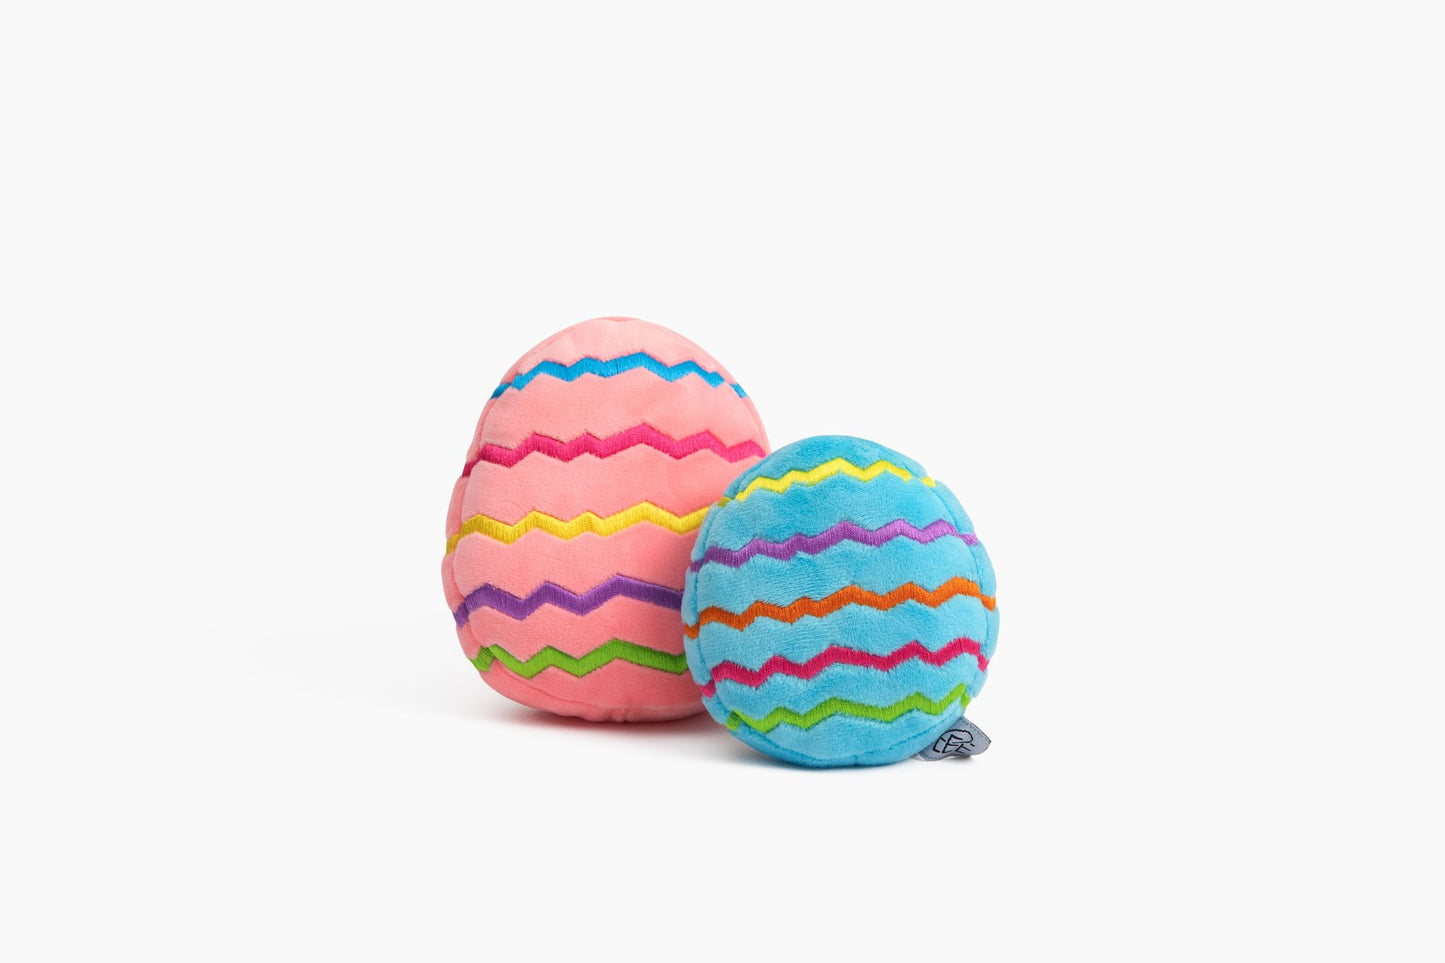 Midlee Easter Egg Plush Dog Toy - Pink